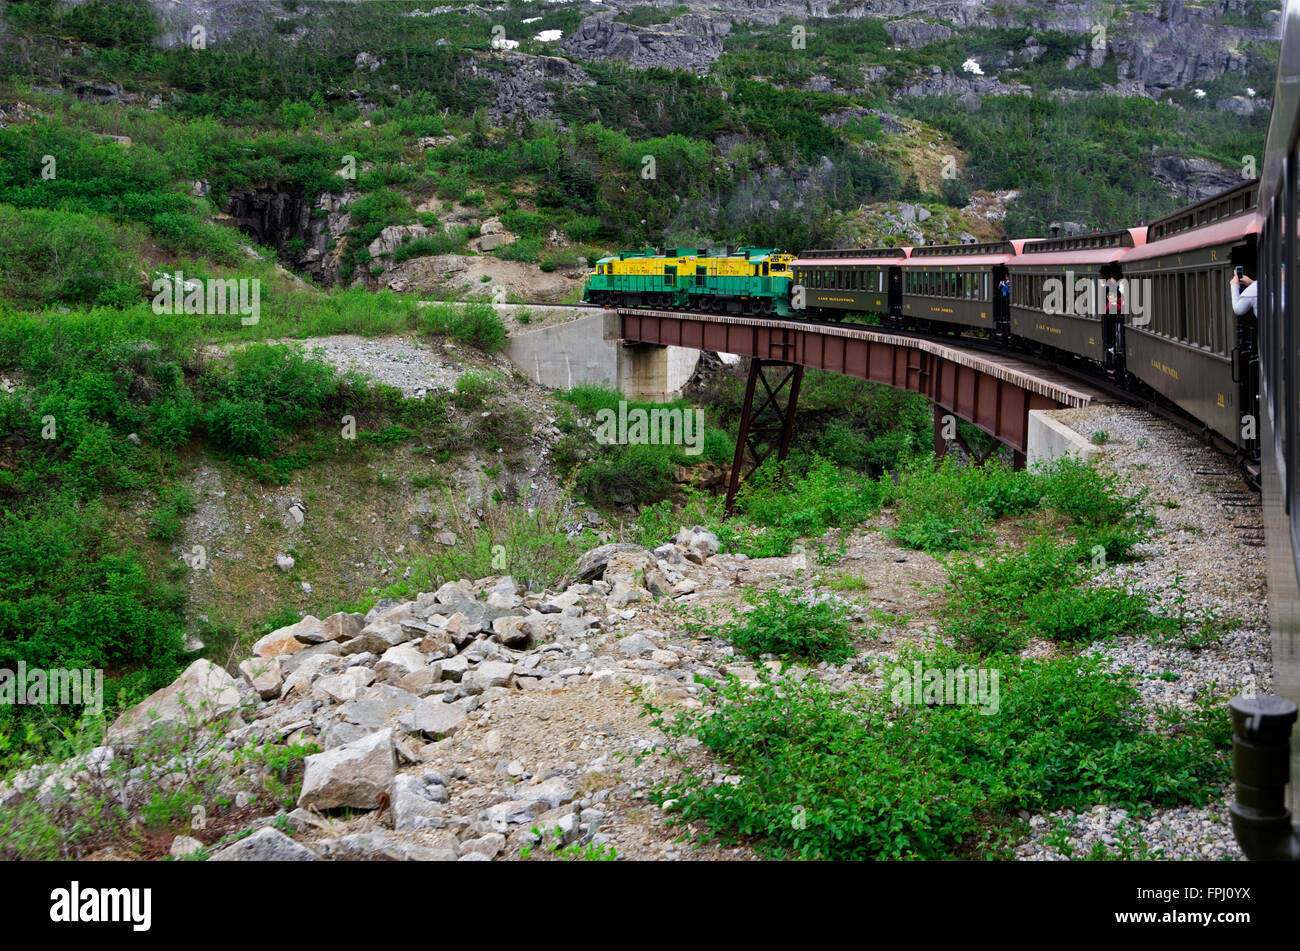 White Pass Railroad electric engine pulls train passenger cars over trestle bridge towards tunnel in the rocks. Stock Photo